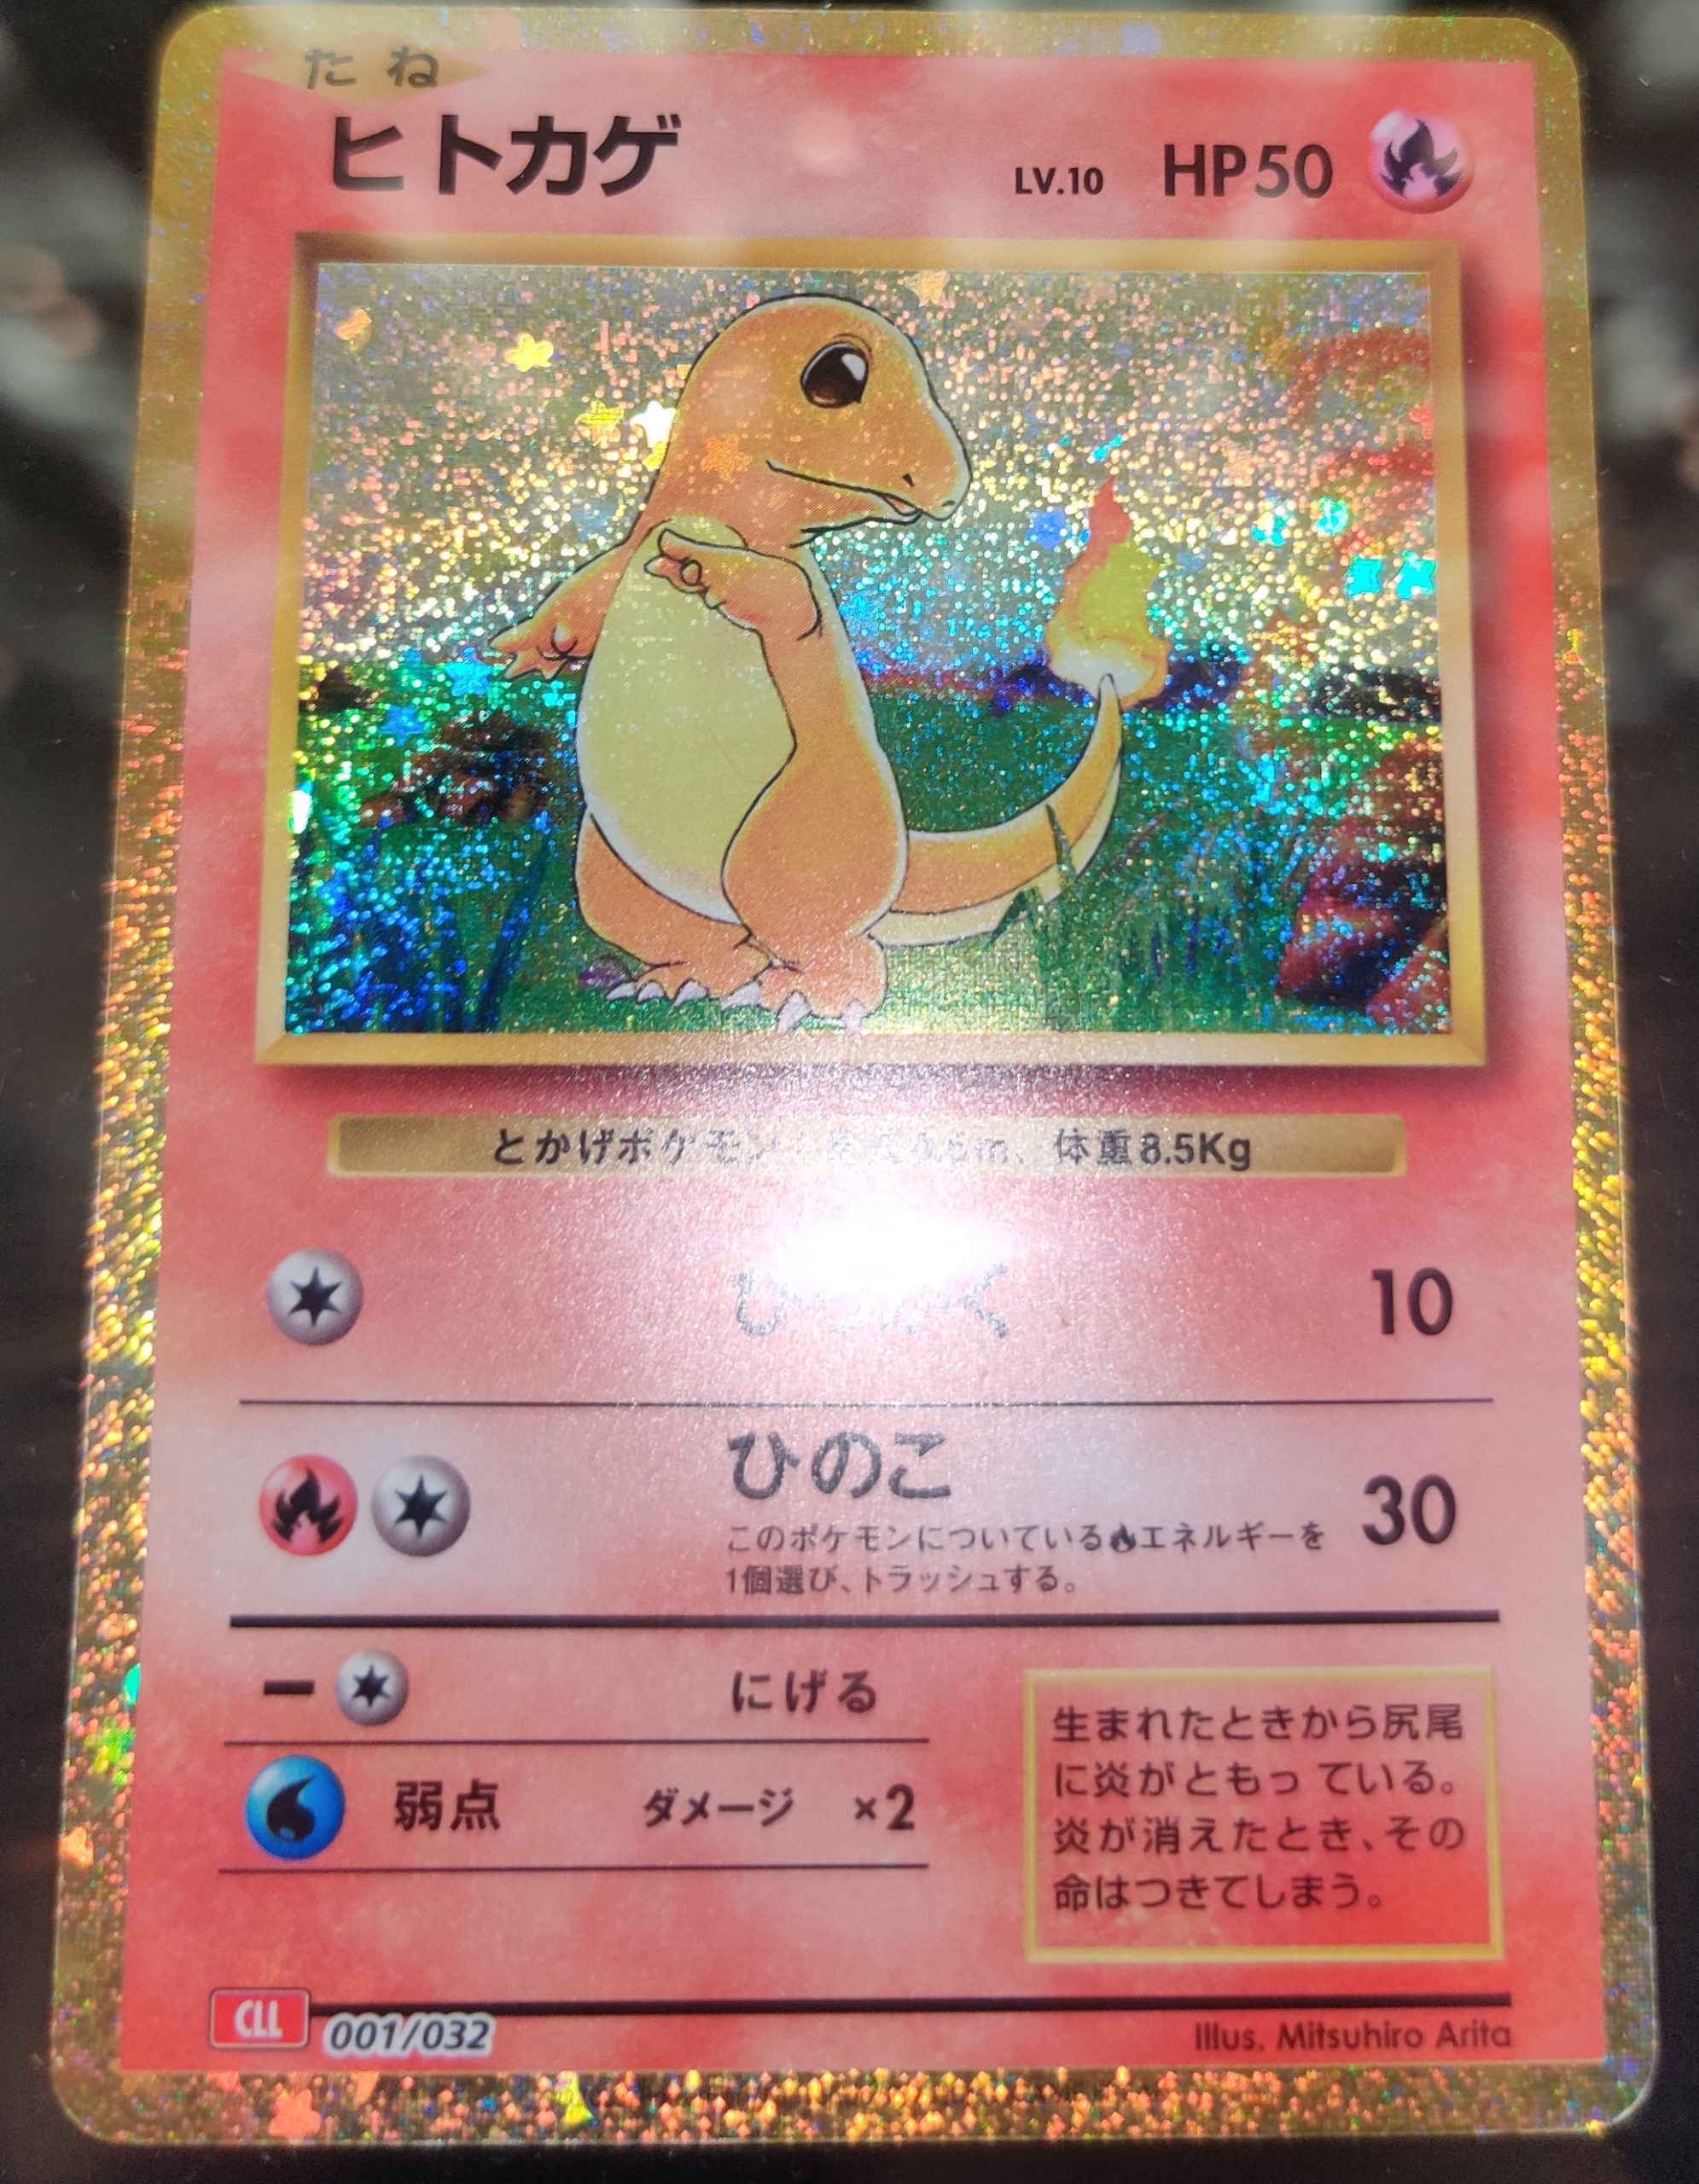 Pokémon Trading Card Game Classic